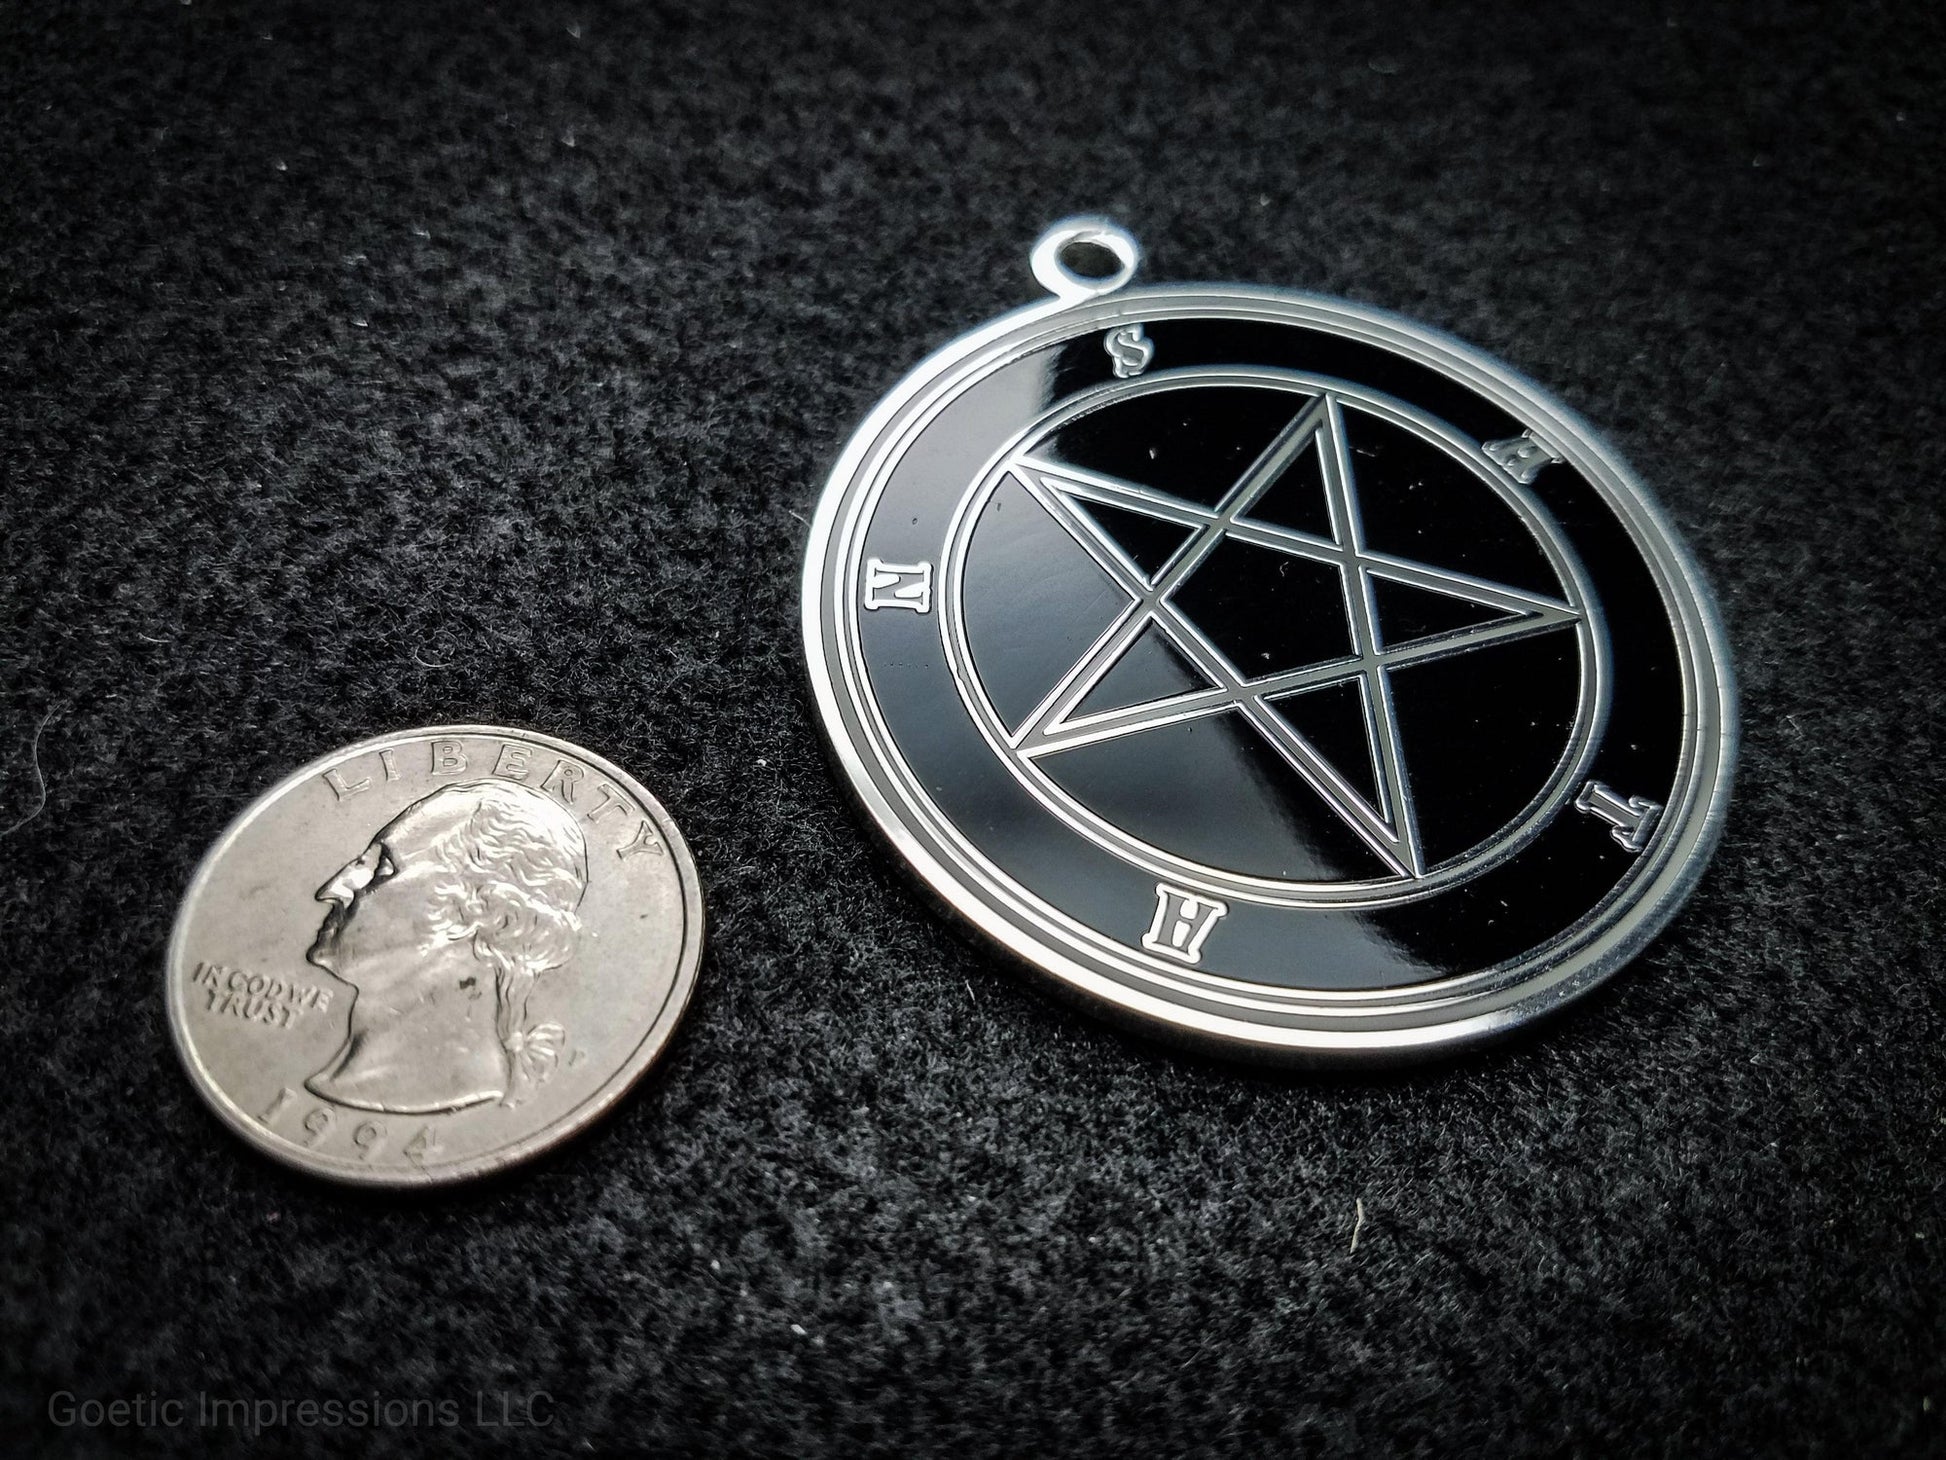 Black and Grey satanic medallion